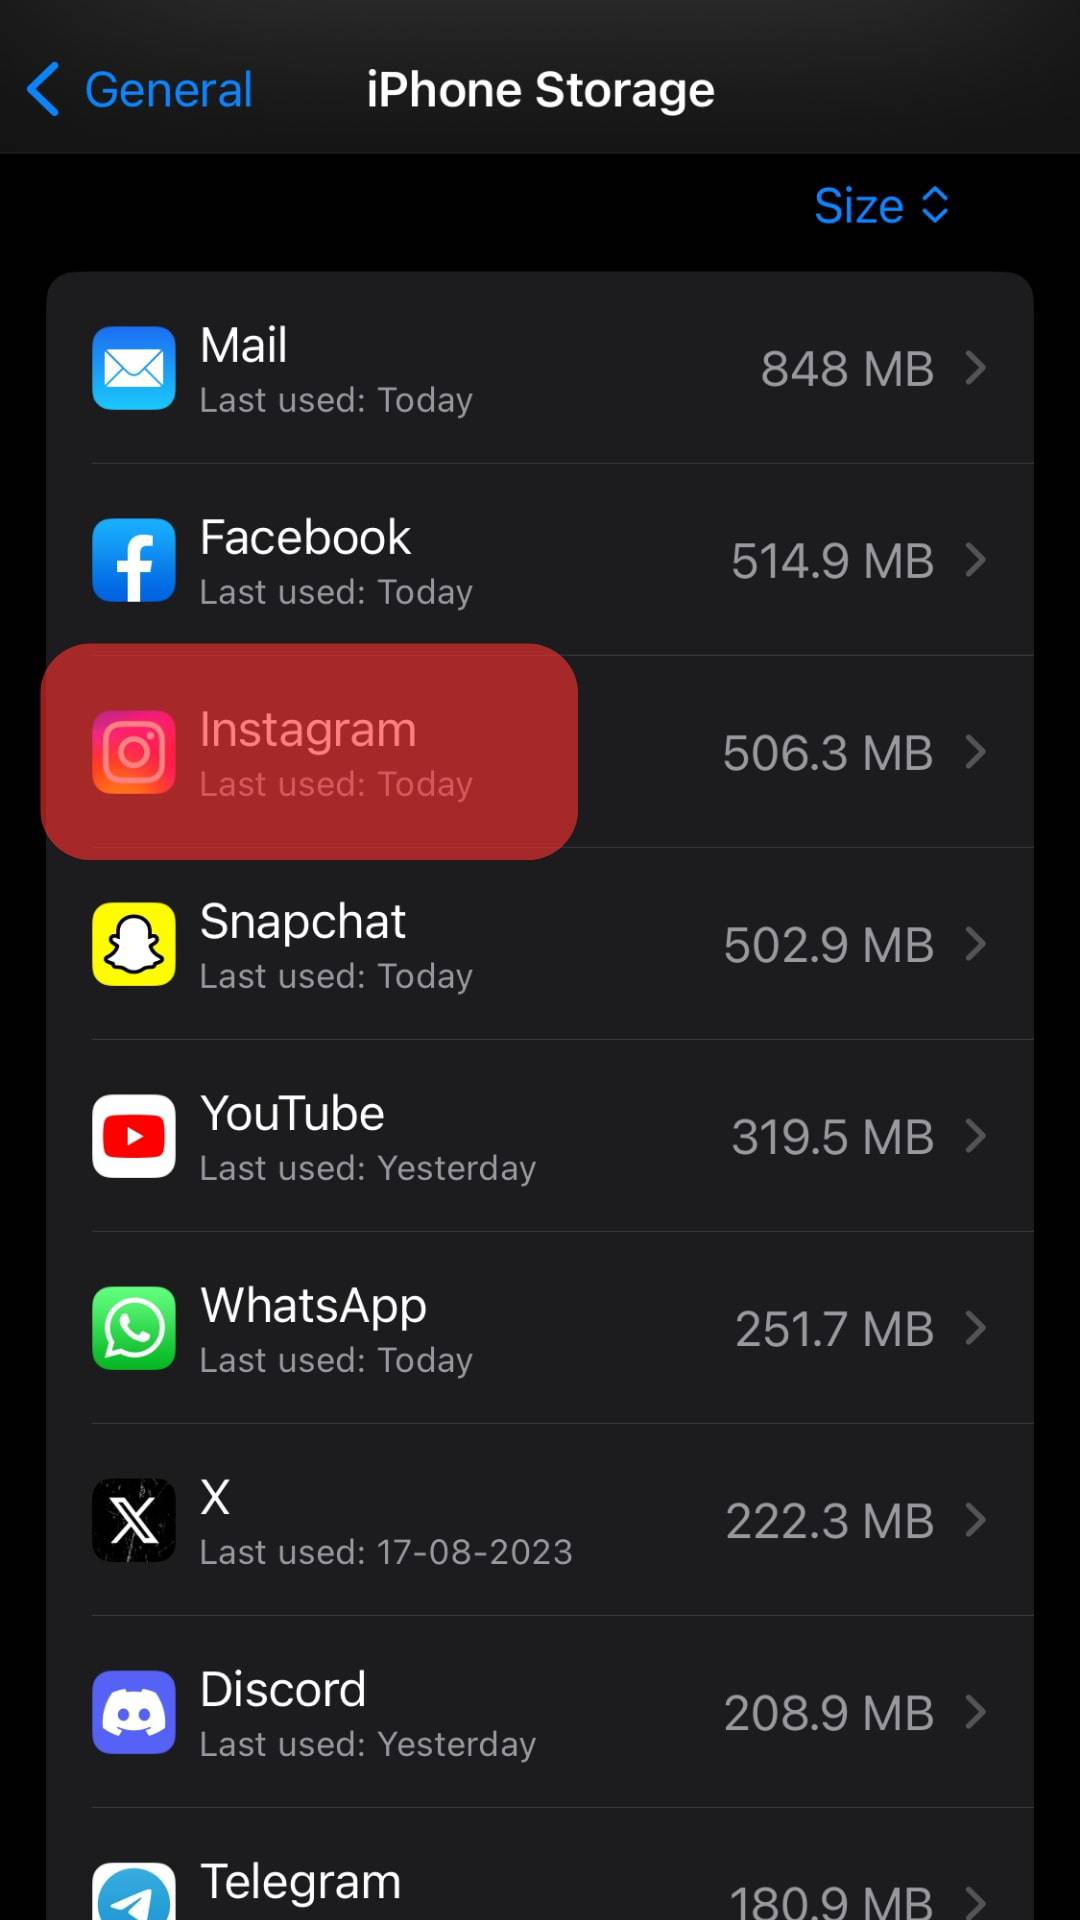 Find The Instagram App In Iphone Storage